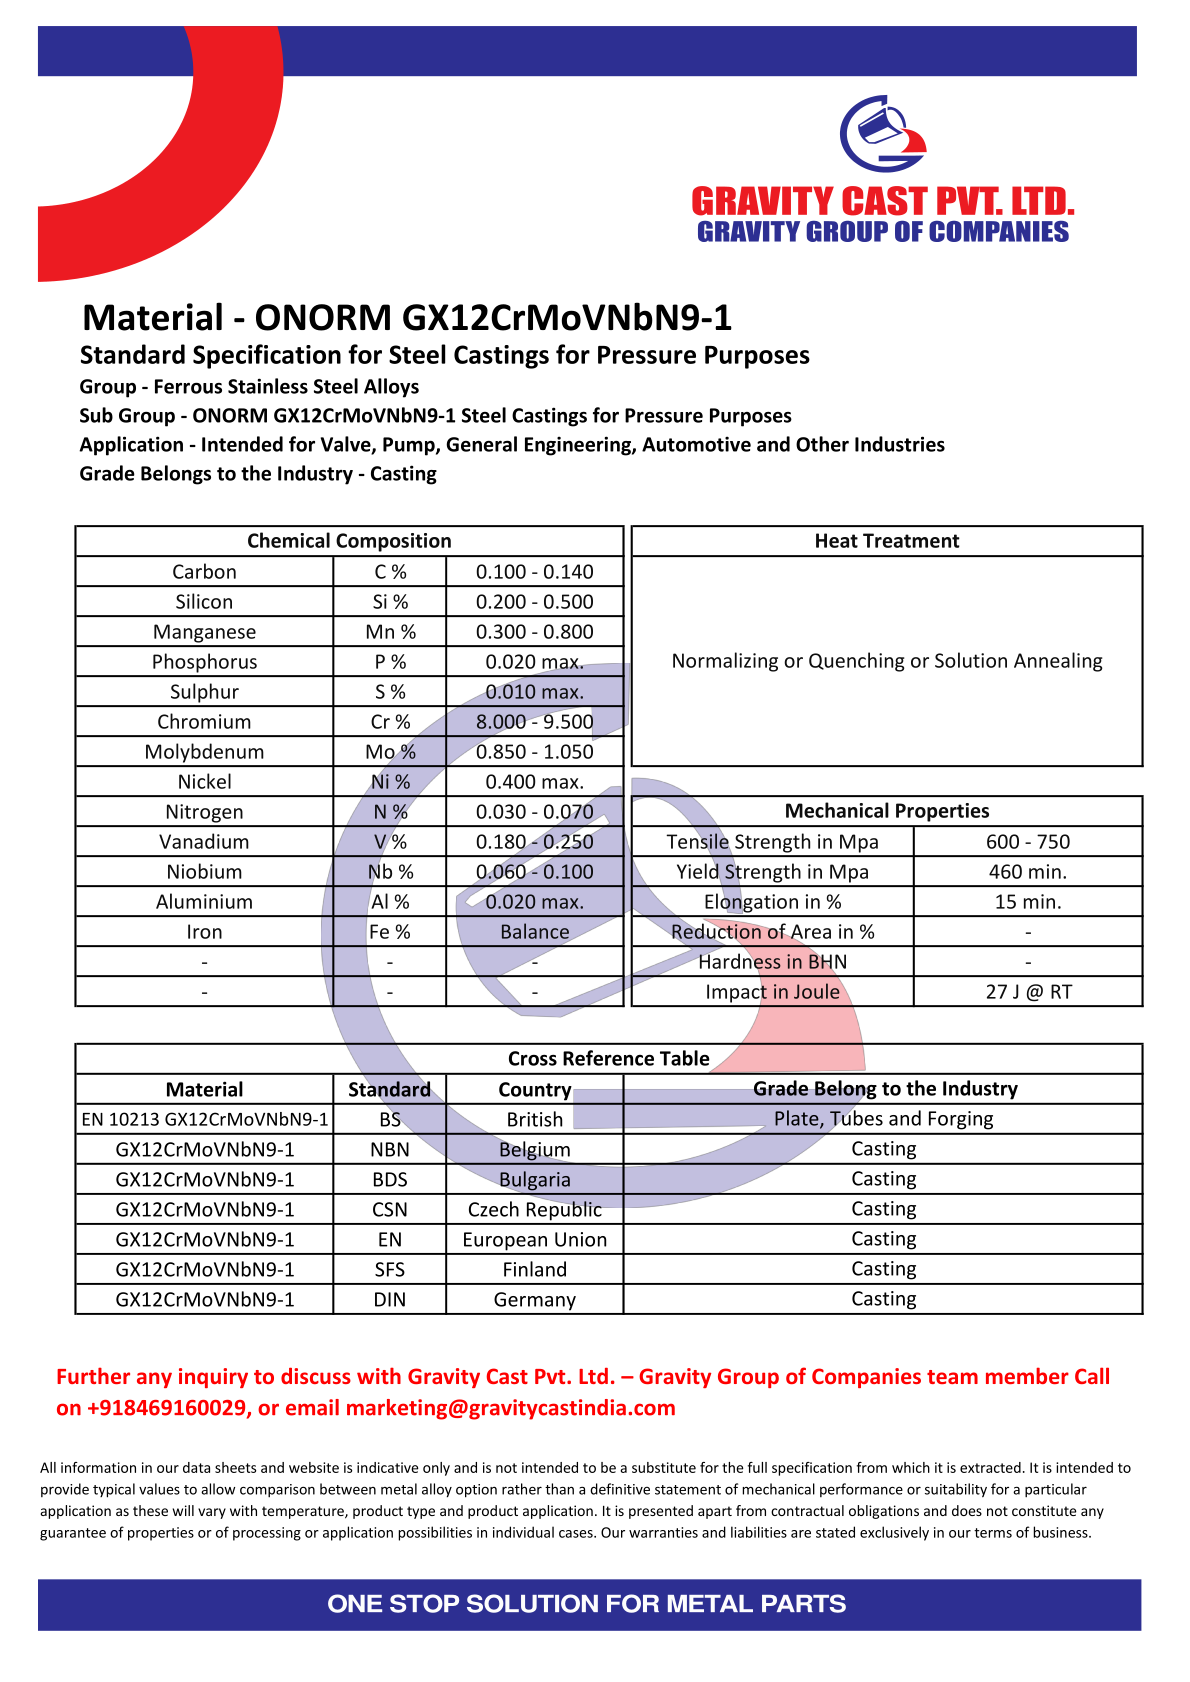 ONORM GX12CrMoVNbN9-1.pdf